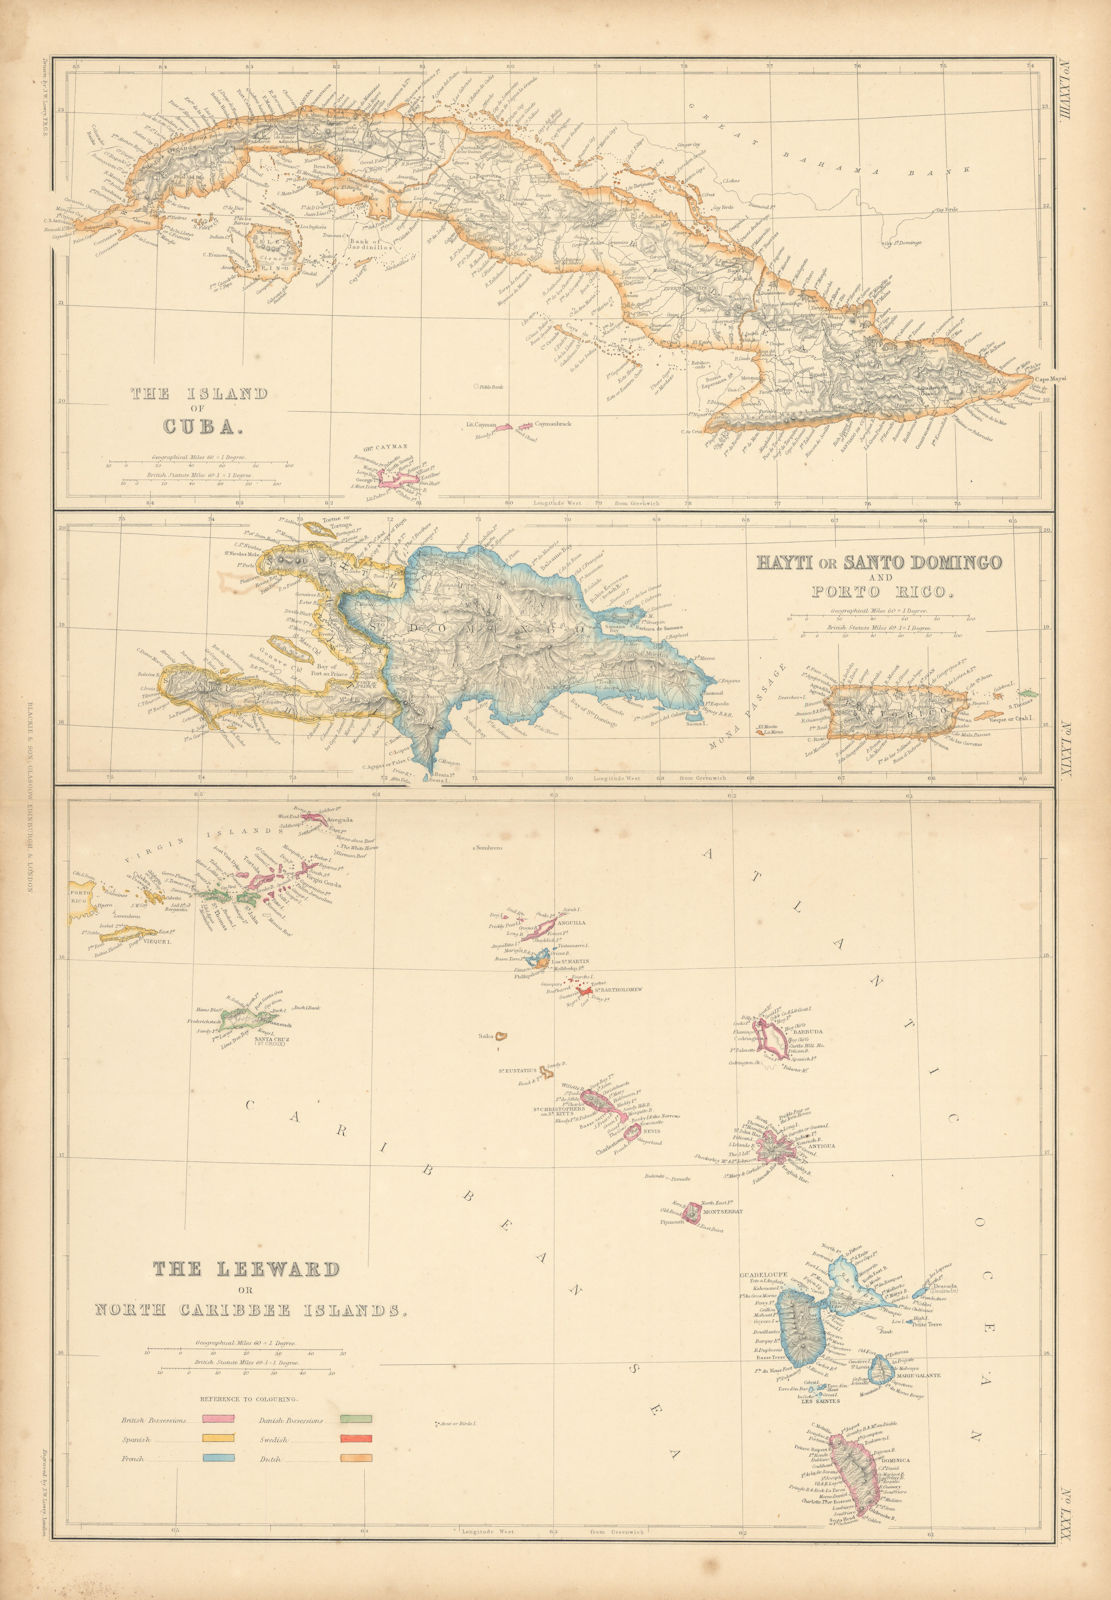 Leeward Islands. Cuba, Hayti/Haiti or Santo Domingo, Puerto Rico. LOWRY 1859 map